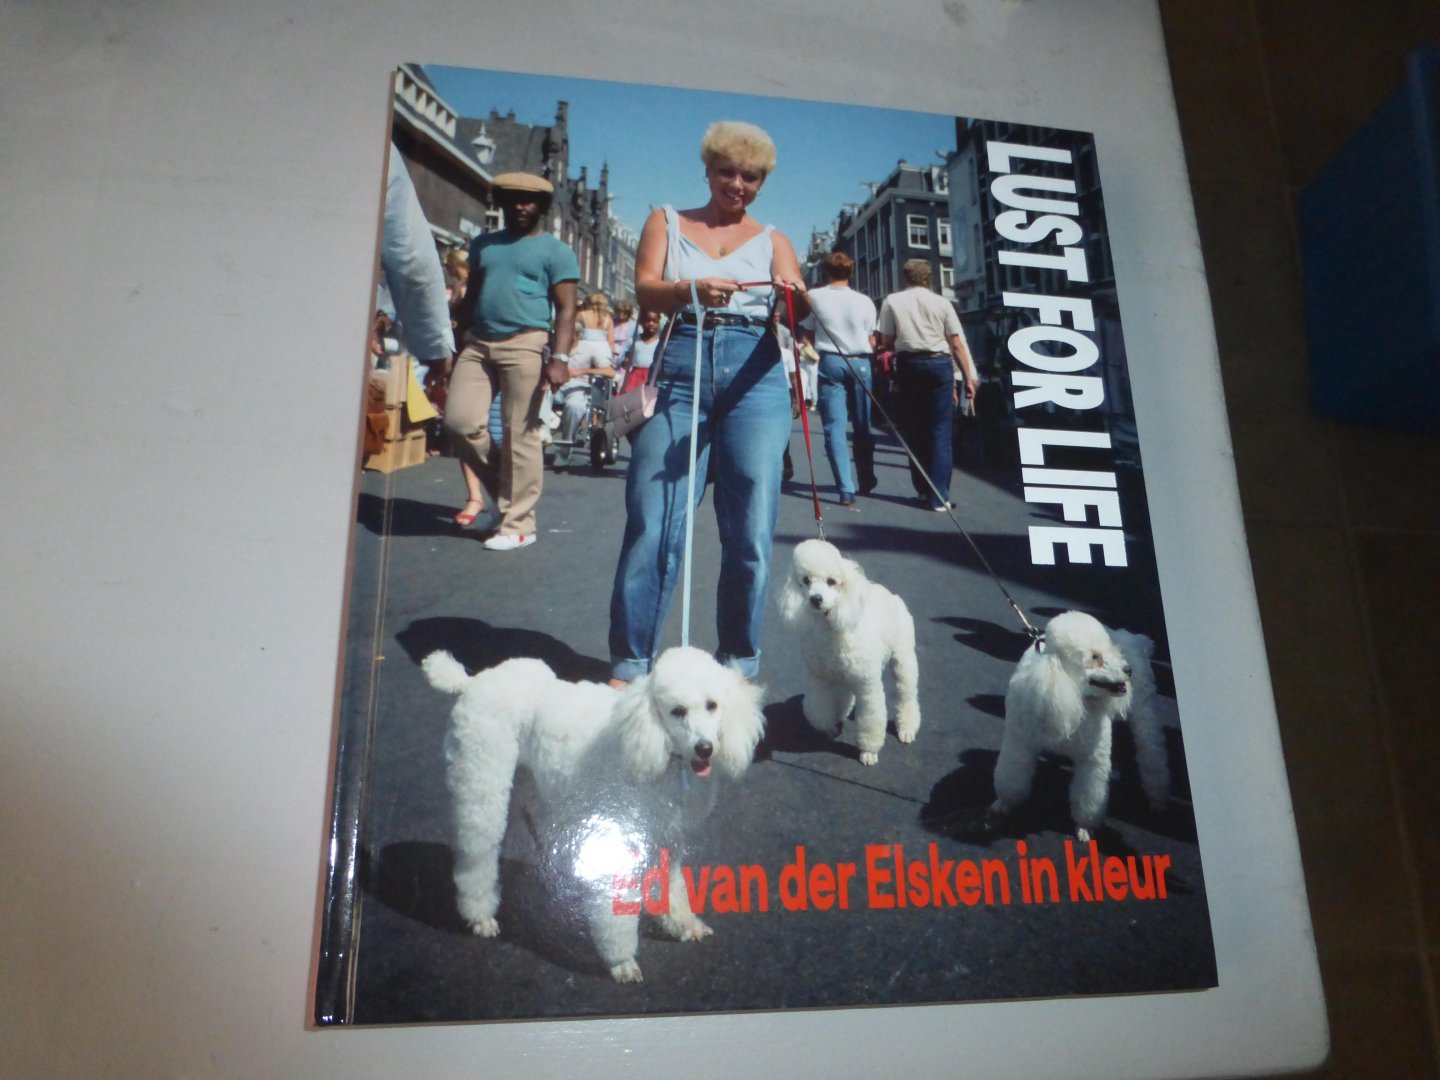 Gierstberg, Frits, Harrevelt, Loes van, Pietsch, Katrin - Lust for Life / Ed van der Elsken in kleur